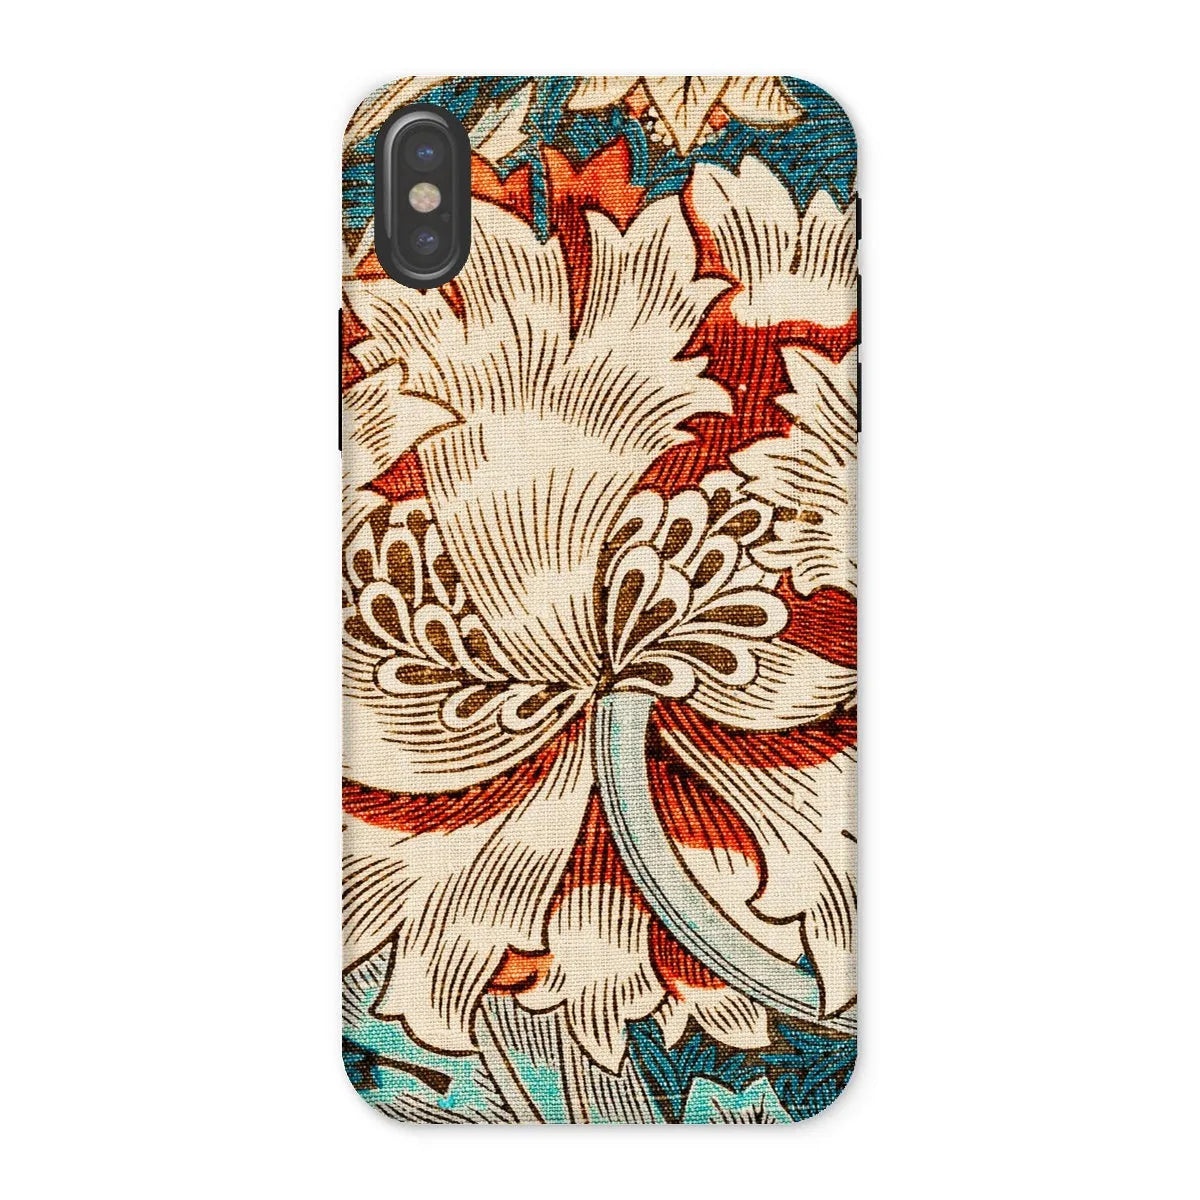 Honeysuckle Too By William Morris Phone Case - Iphone x / Matte - Mobile Phone Cases - Aesthetic Art